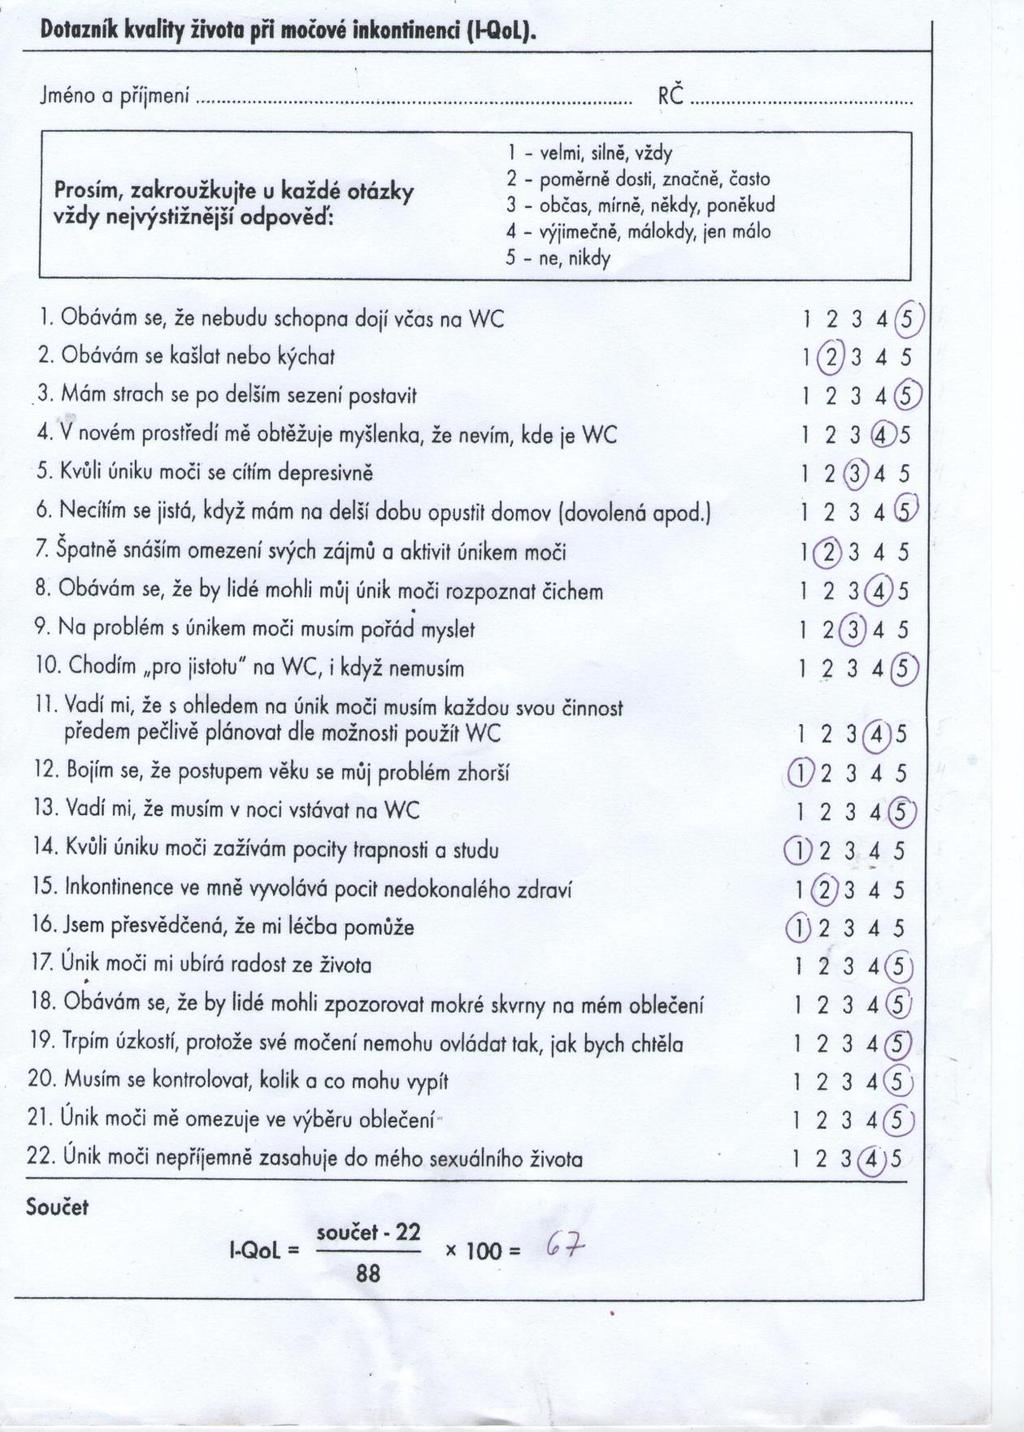 Příloha 7 - Dotazník I-QoL (kurz 2009,